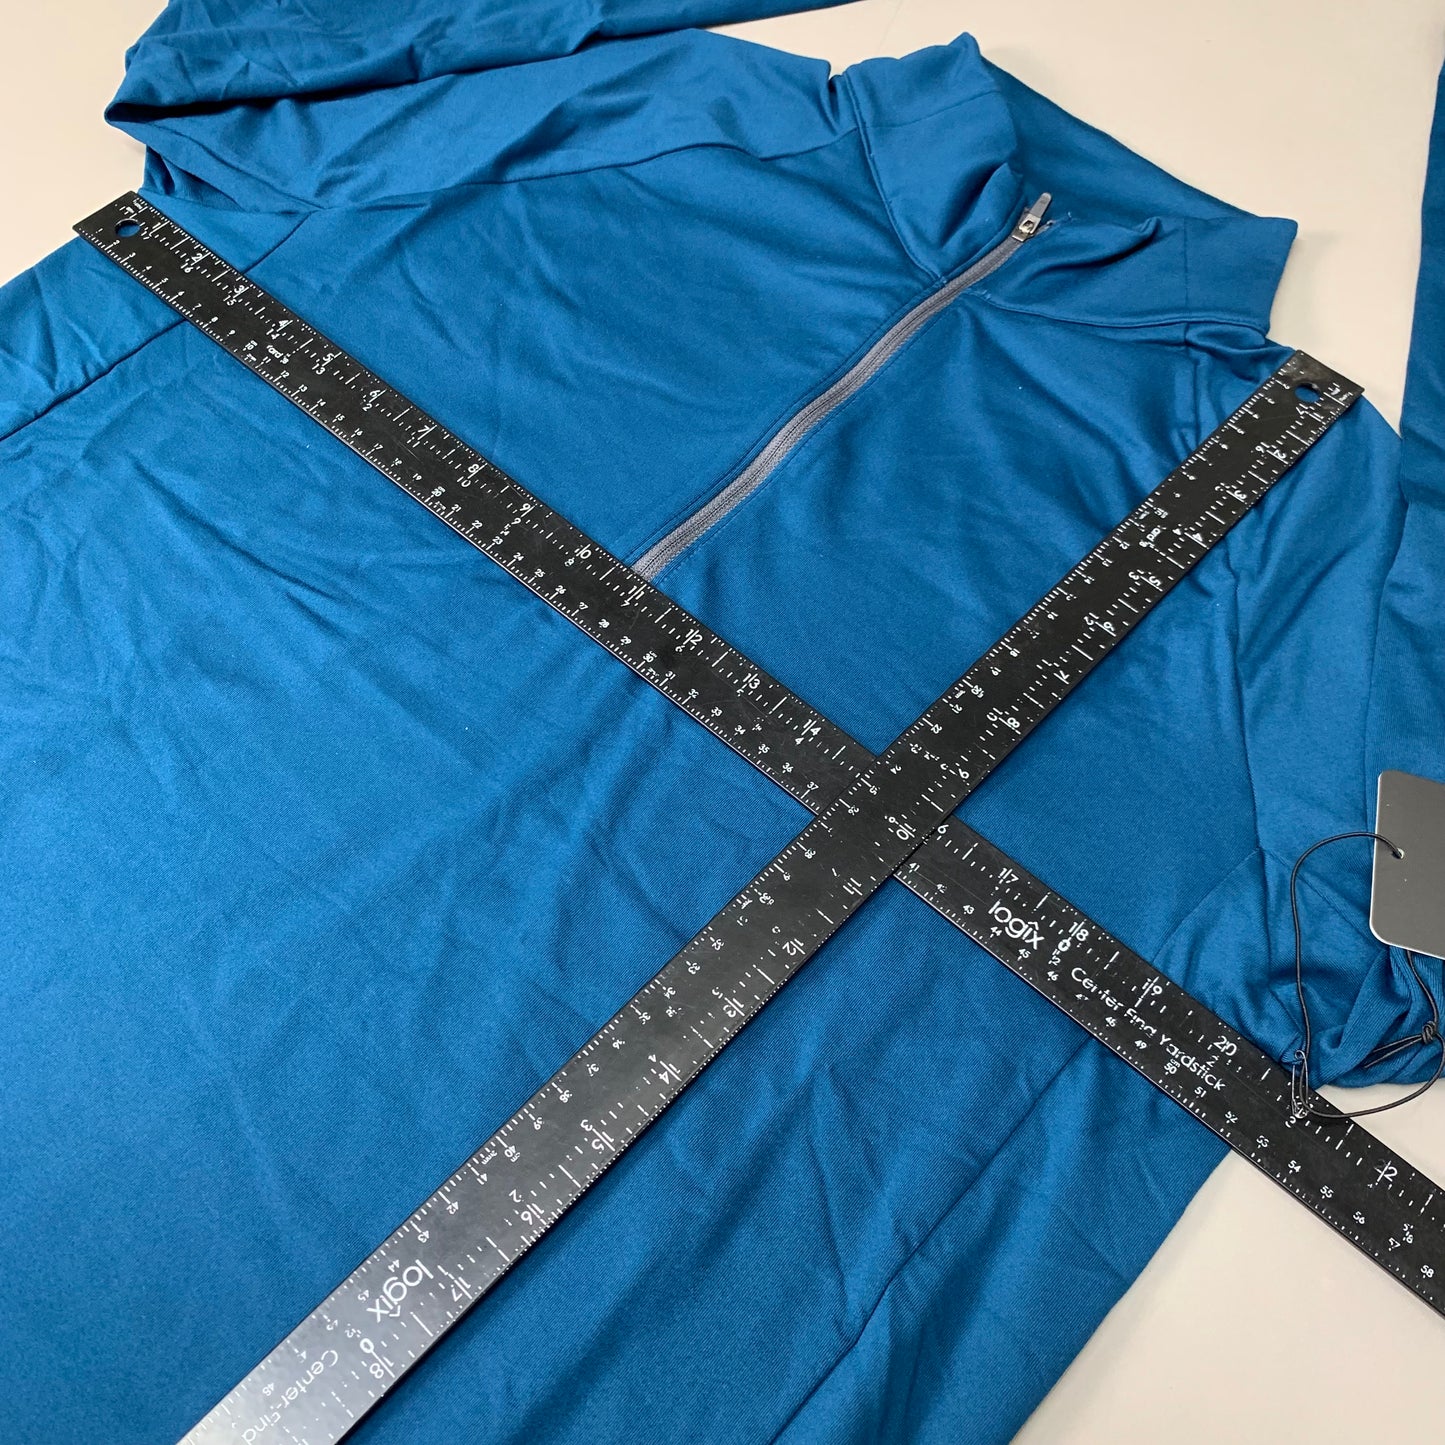 NATHAN Tempo 1/4 Zip Long Sleeve Shirt 2.0 Men's Medium Sailor Blue NS50960-60062-M (New)